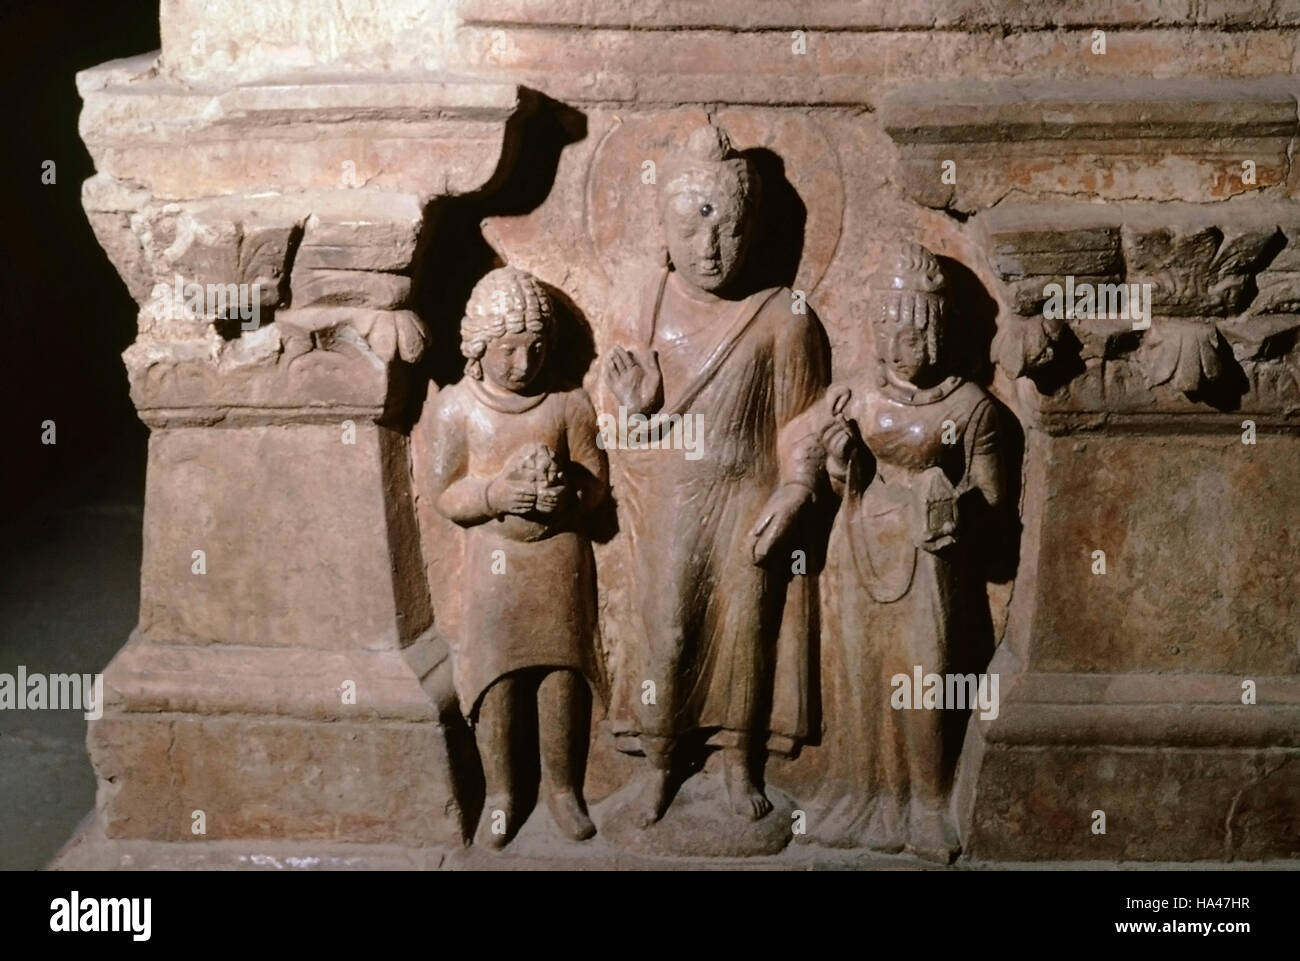 Statua di Budda con gli operatori. Hadda tepe shuter, stupa 27. L'Afghanistan. Foto Stock